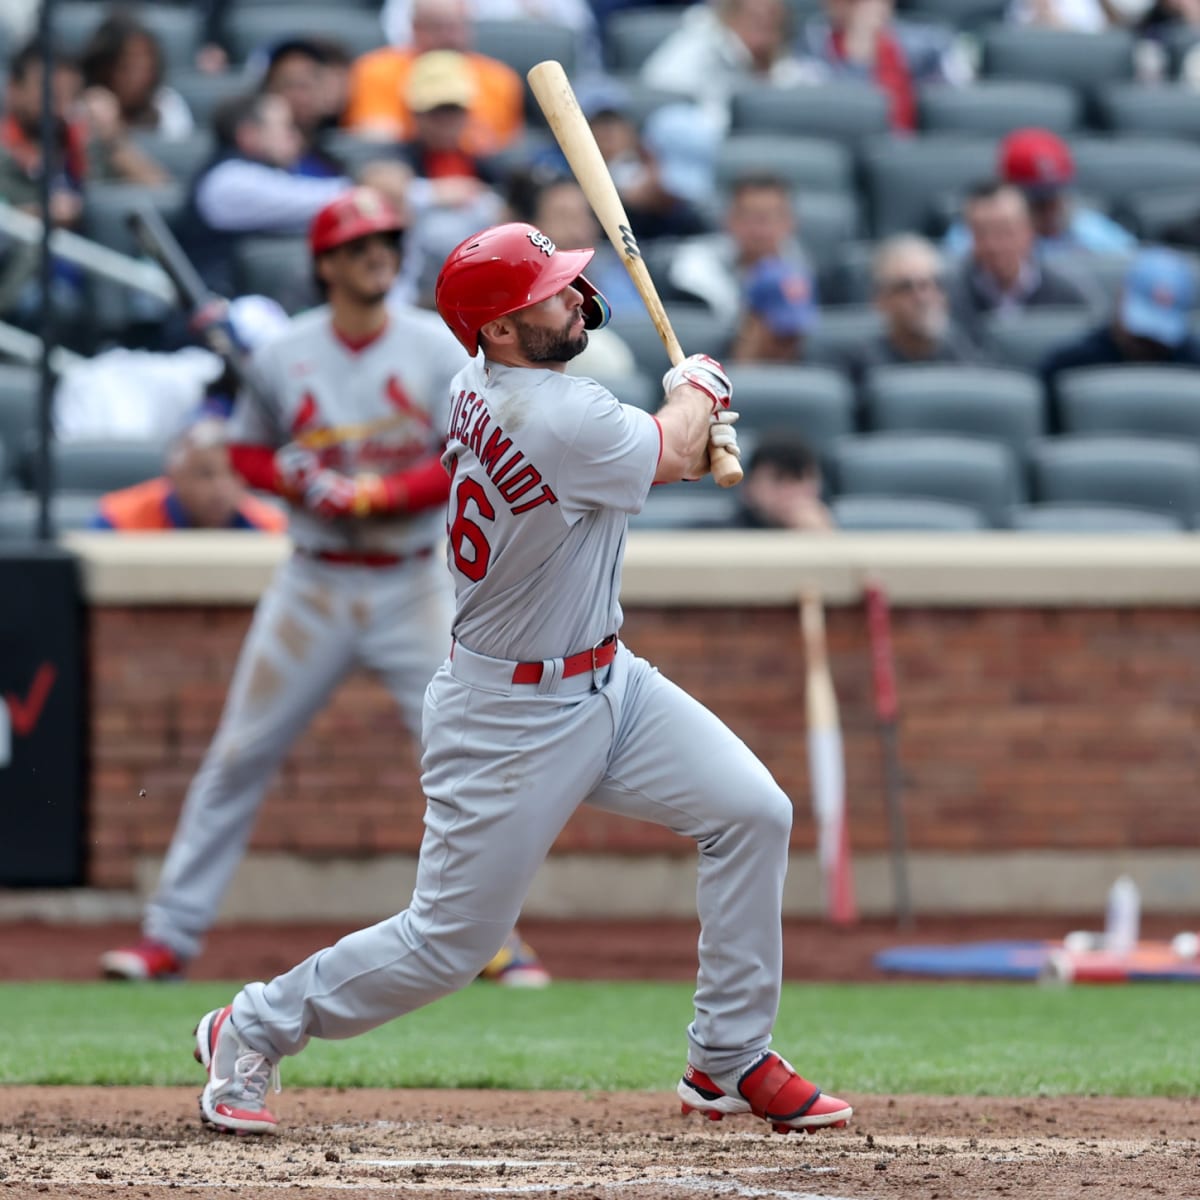 WATCH: Cardinals' Paul Goldschmidt Hits Home Run on Thursday Against Mets -  Fastball